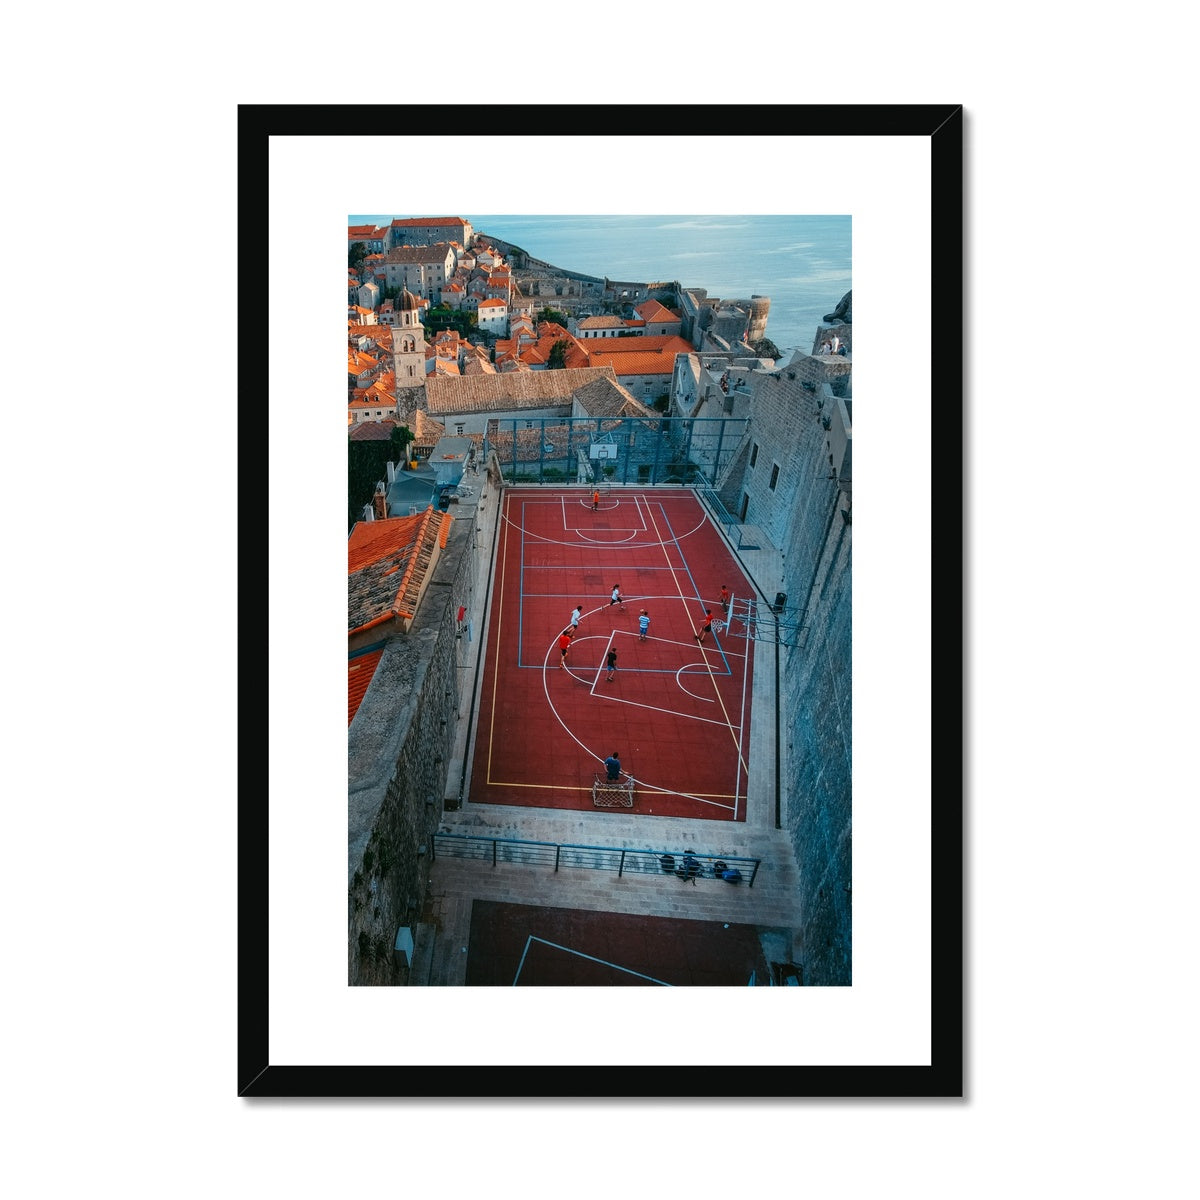 Taking Shots Vol.1 #20 - Dubrovnik, Croatia